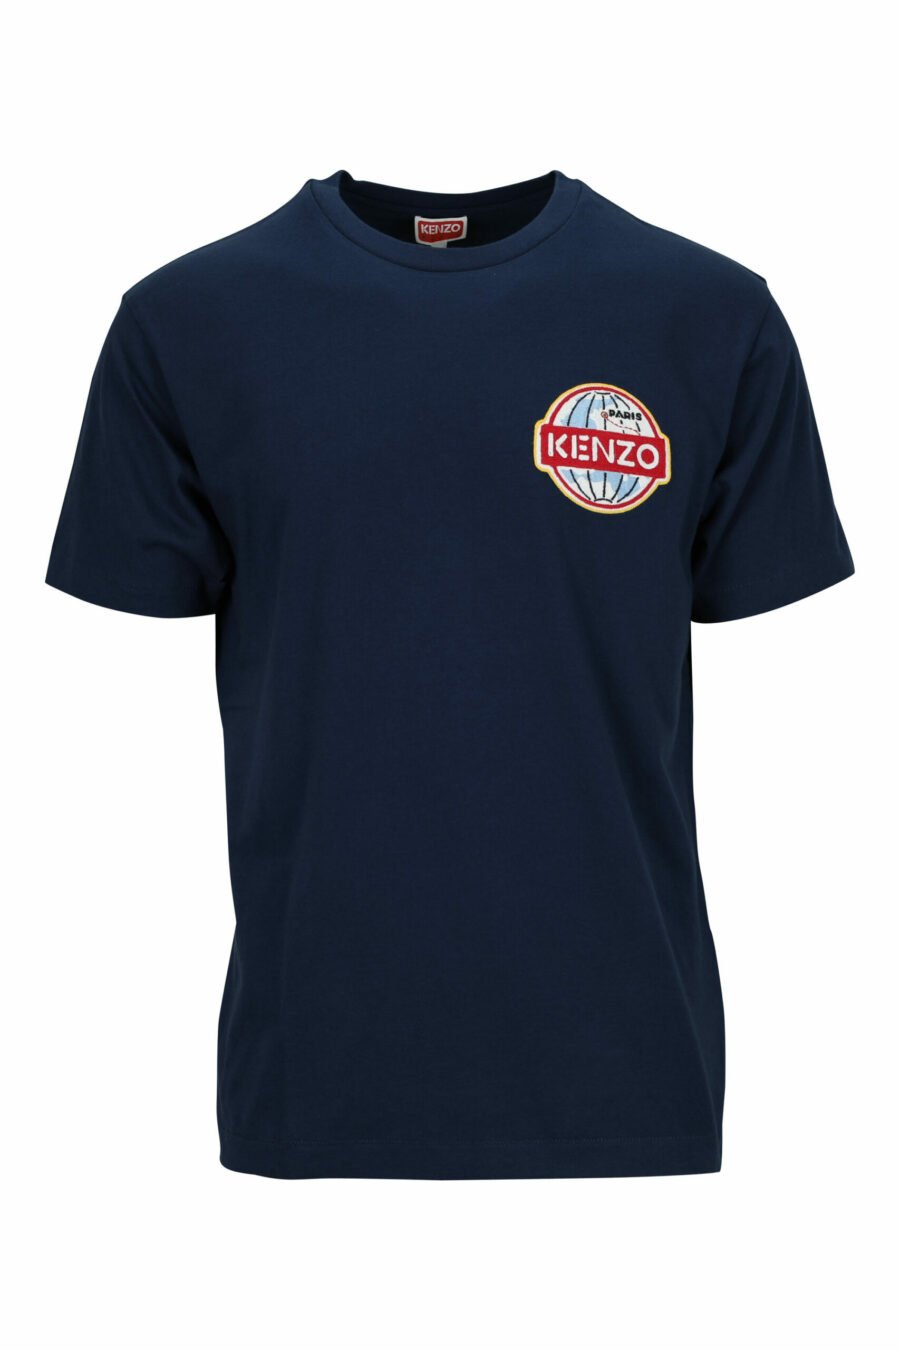 T-shirt bleu avec mini-logo rond "Kenzo" - 3612230544475 à l'échelle